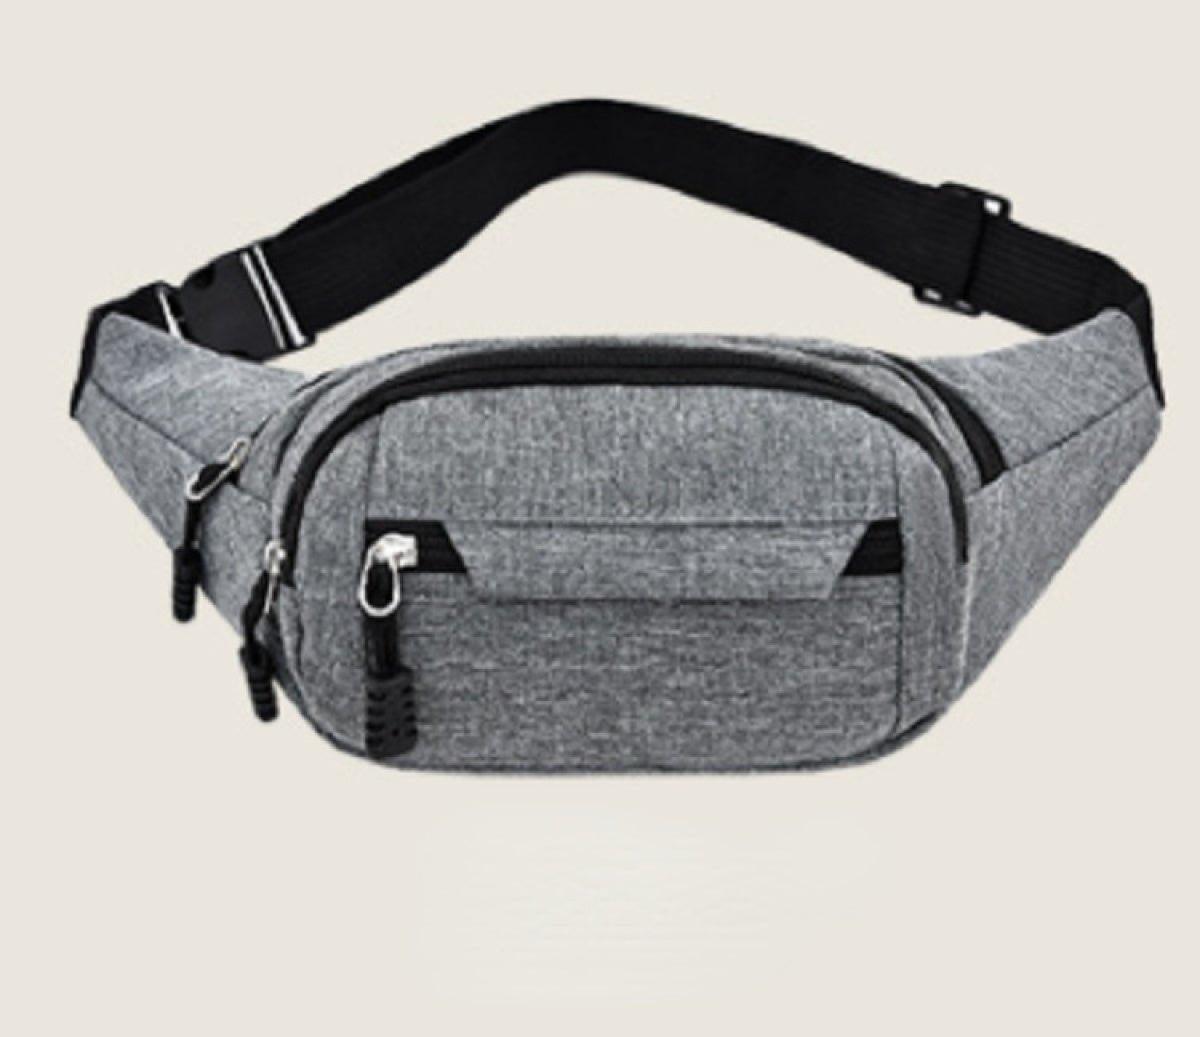 Casual Multifunctional Zipper Belt Bag